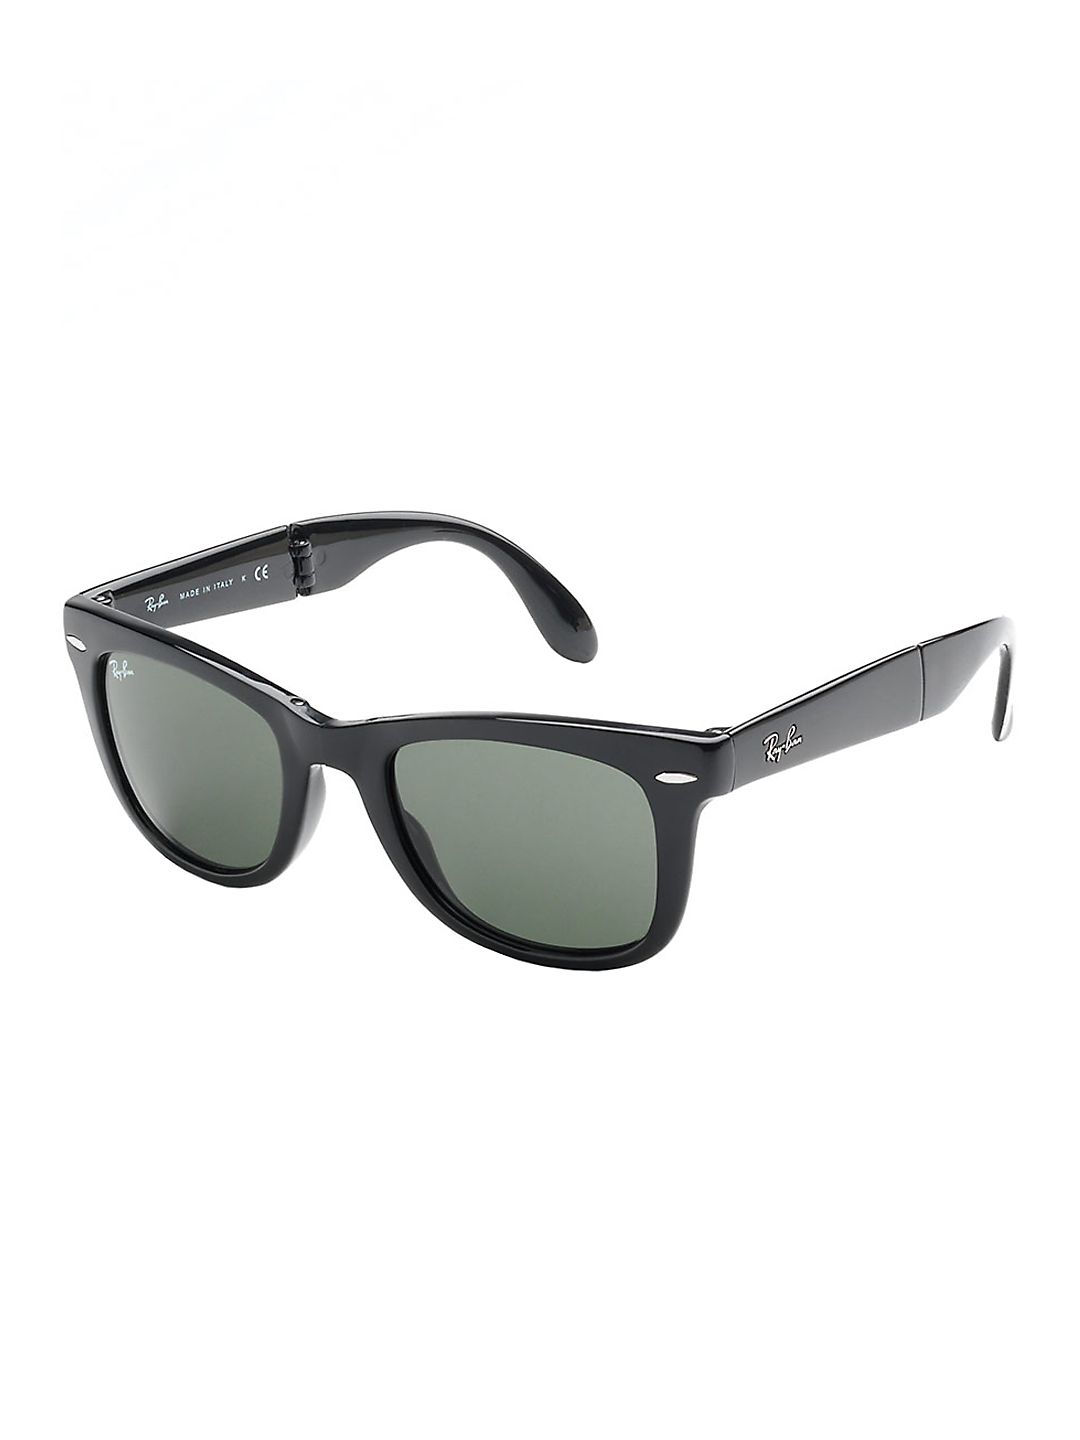 Folding Wayfarer Sunglasses - image 1 of 2